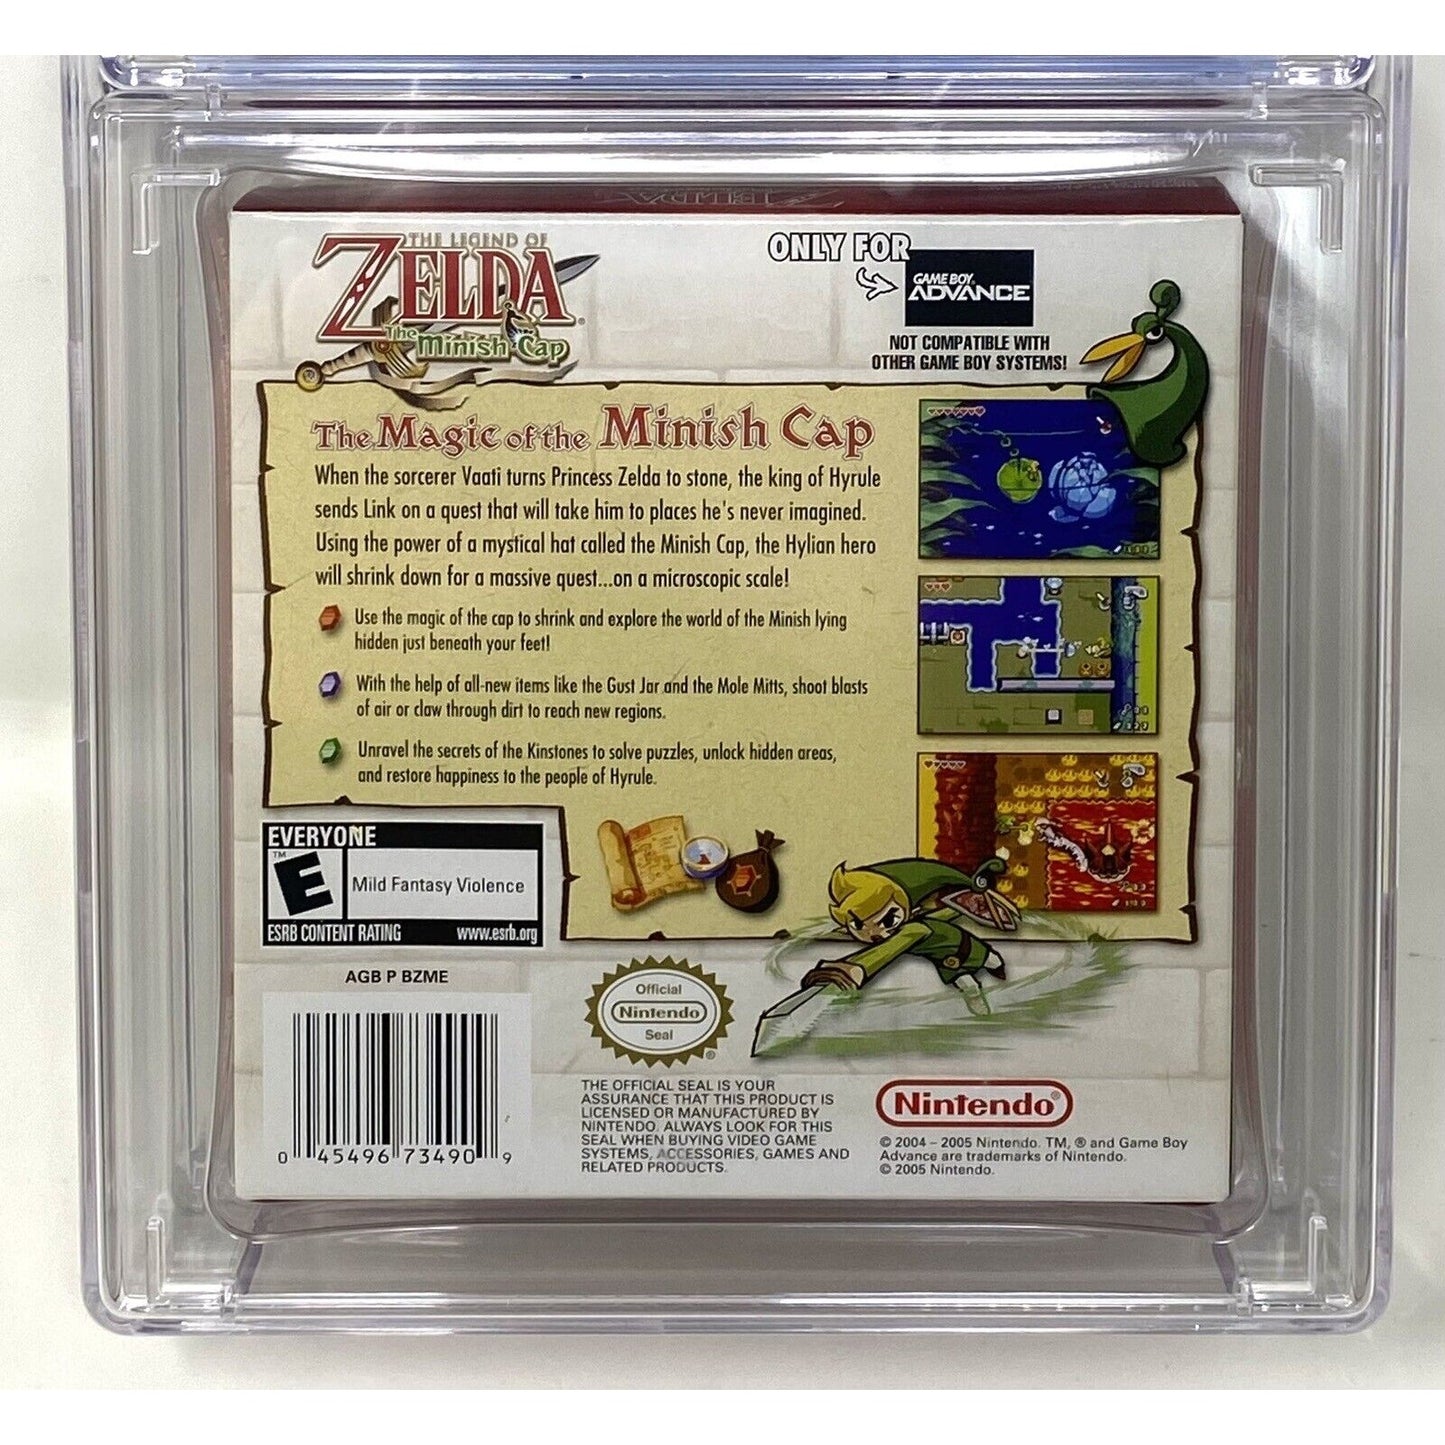 Graded - CGC 8.5 Game Boy Advance 2005 The Legend of Zelda The Minish Cap